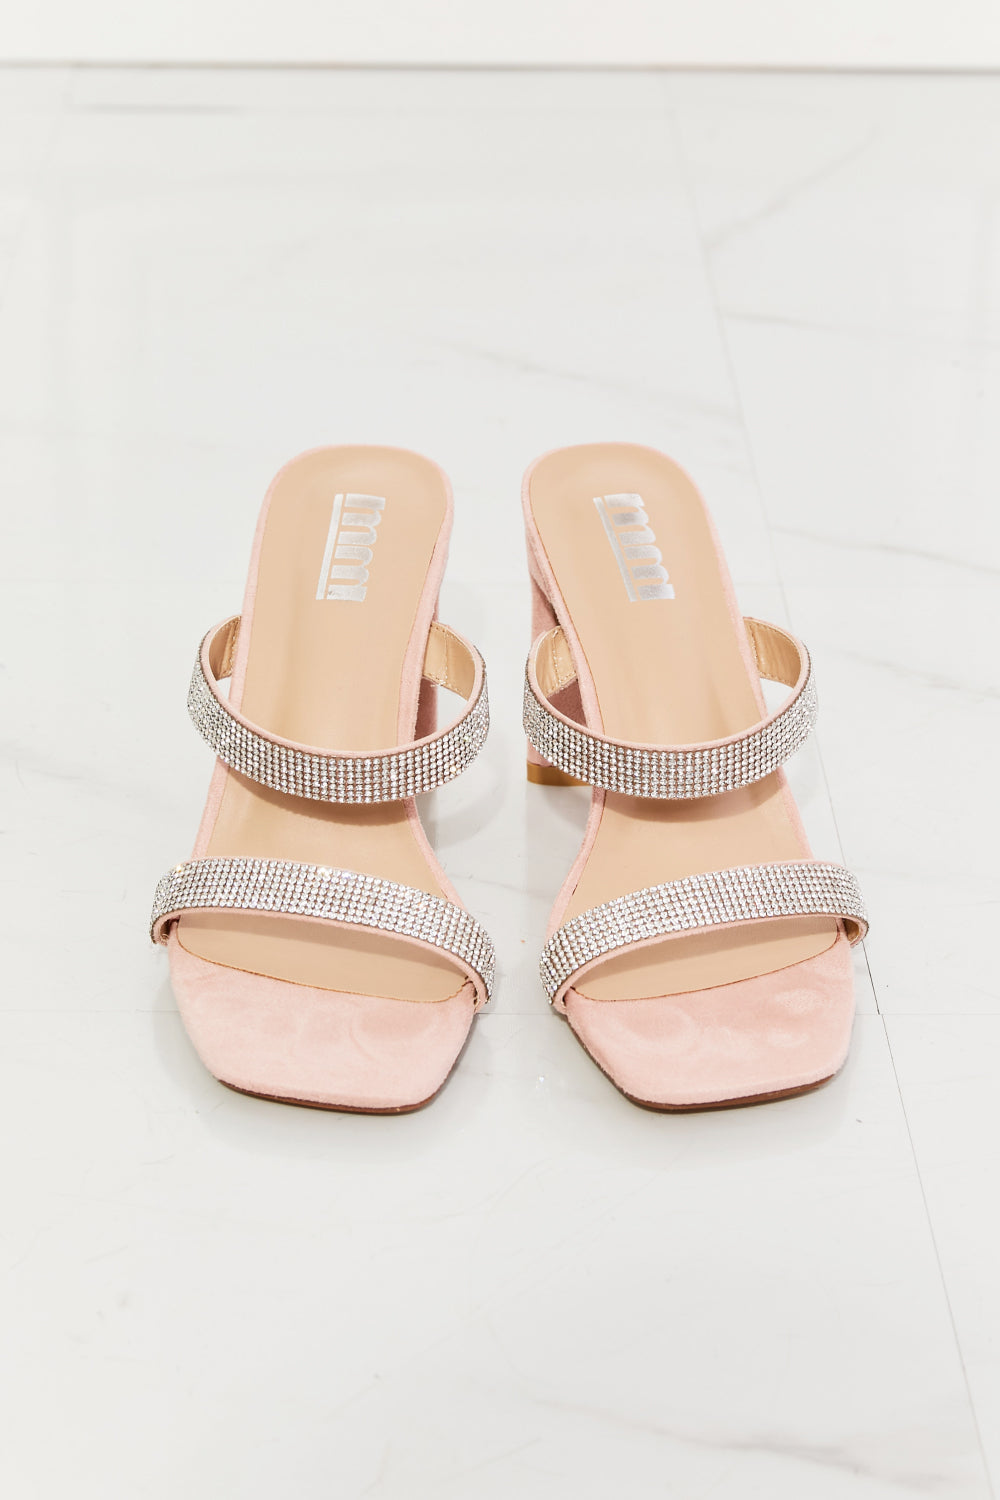 Leave A Little Sparkle Rhinestone Block Heel Sandal in Pink - Copper + Rose